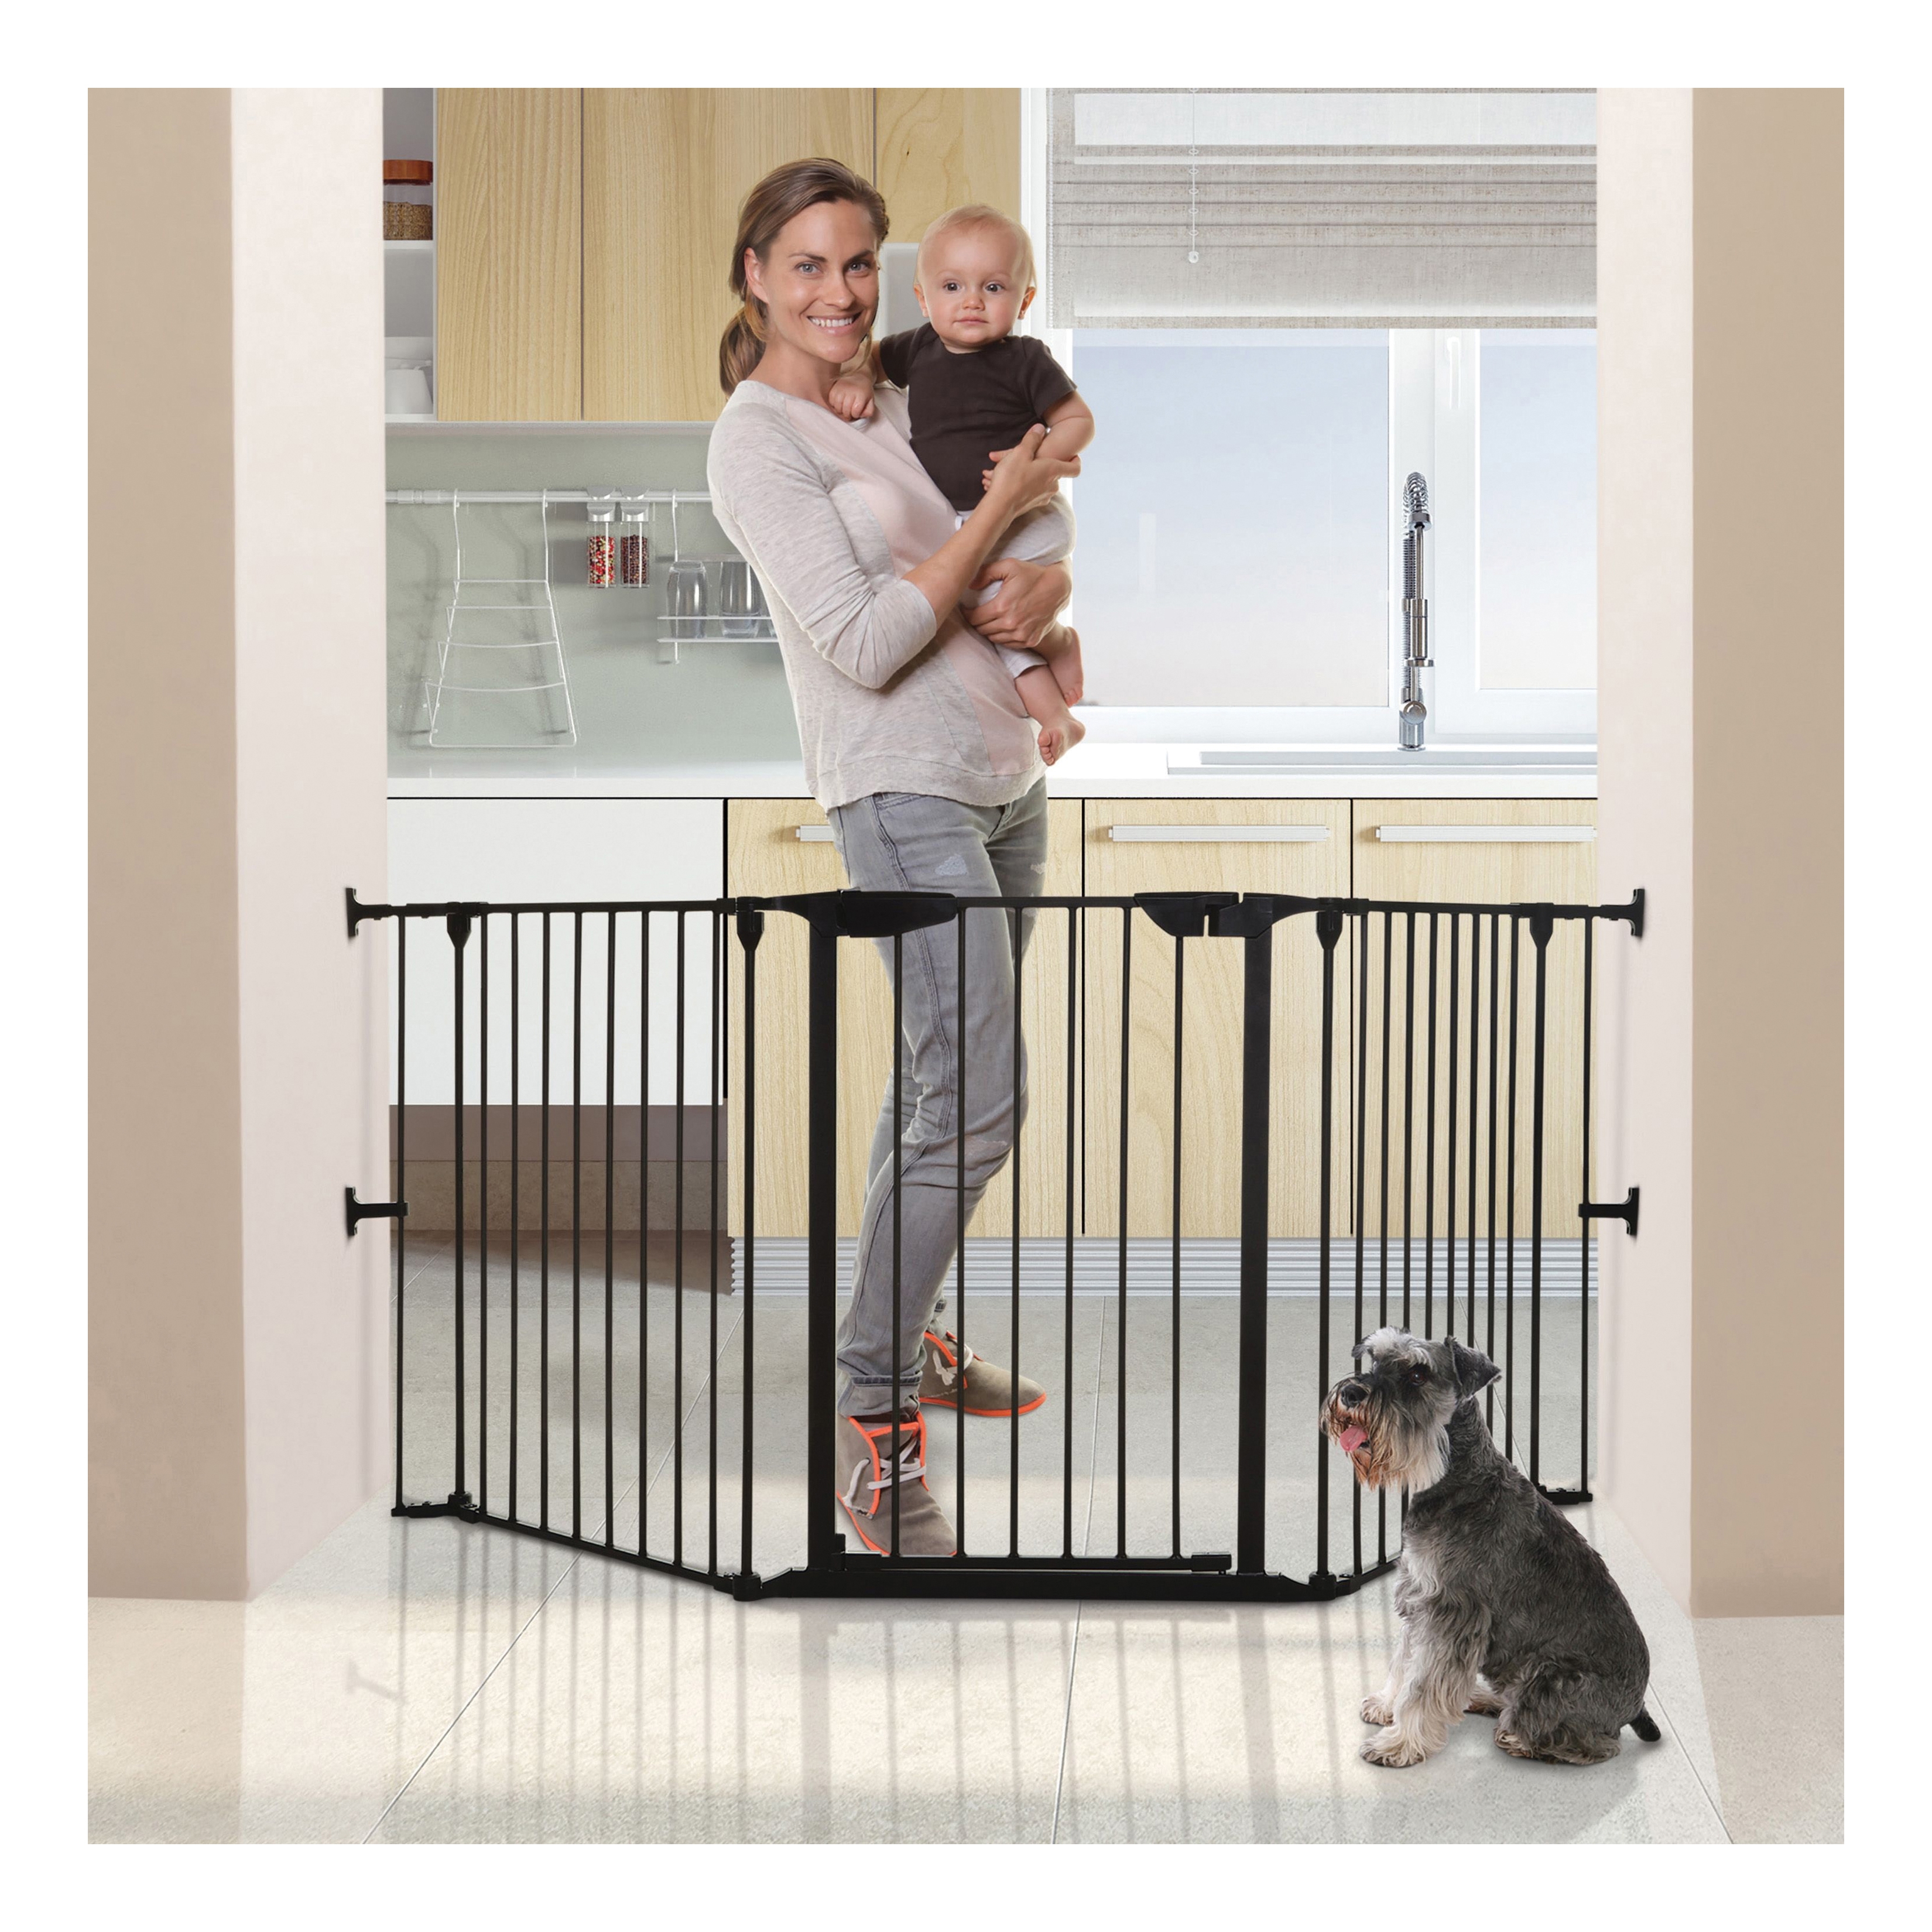 Dreambaby Newport Adapta-Gate L2021 Child Safety Gate, Steel, White, 29 in H Dimensions, Automatic Lock - 3